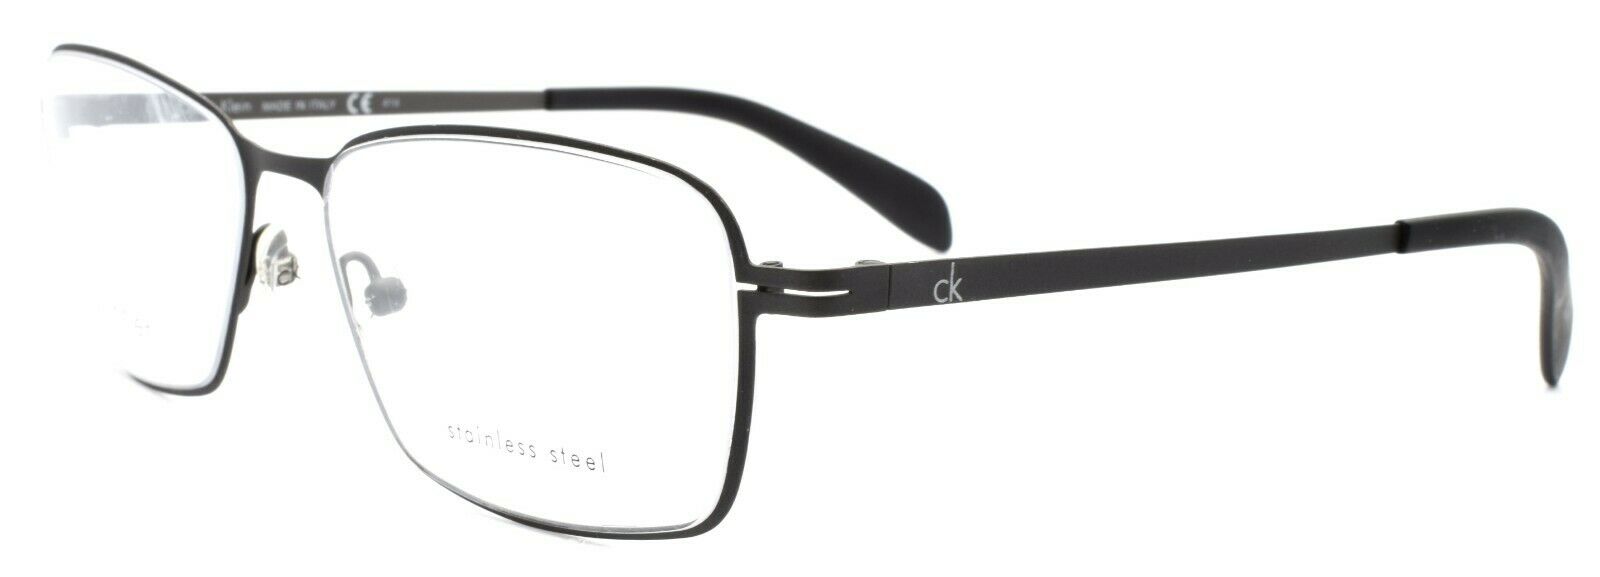 1-Calvin Klein CK5401 060 Men's Eyeglasses Frames 55-16-140 Gunmetal ITALY-0750779068045-IKSpecs